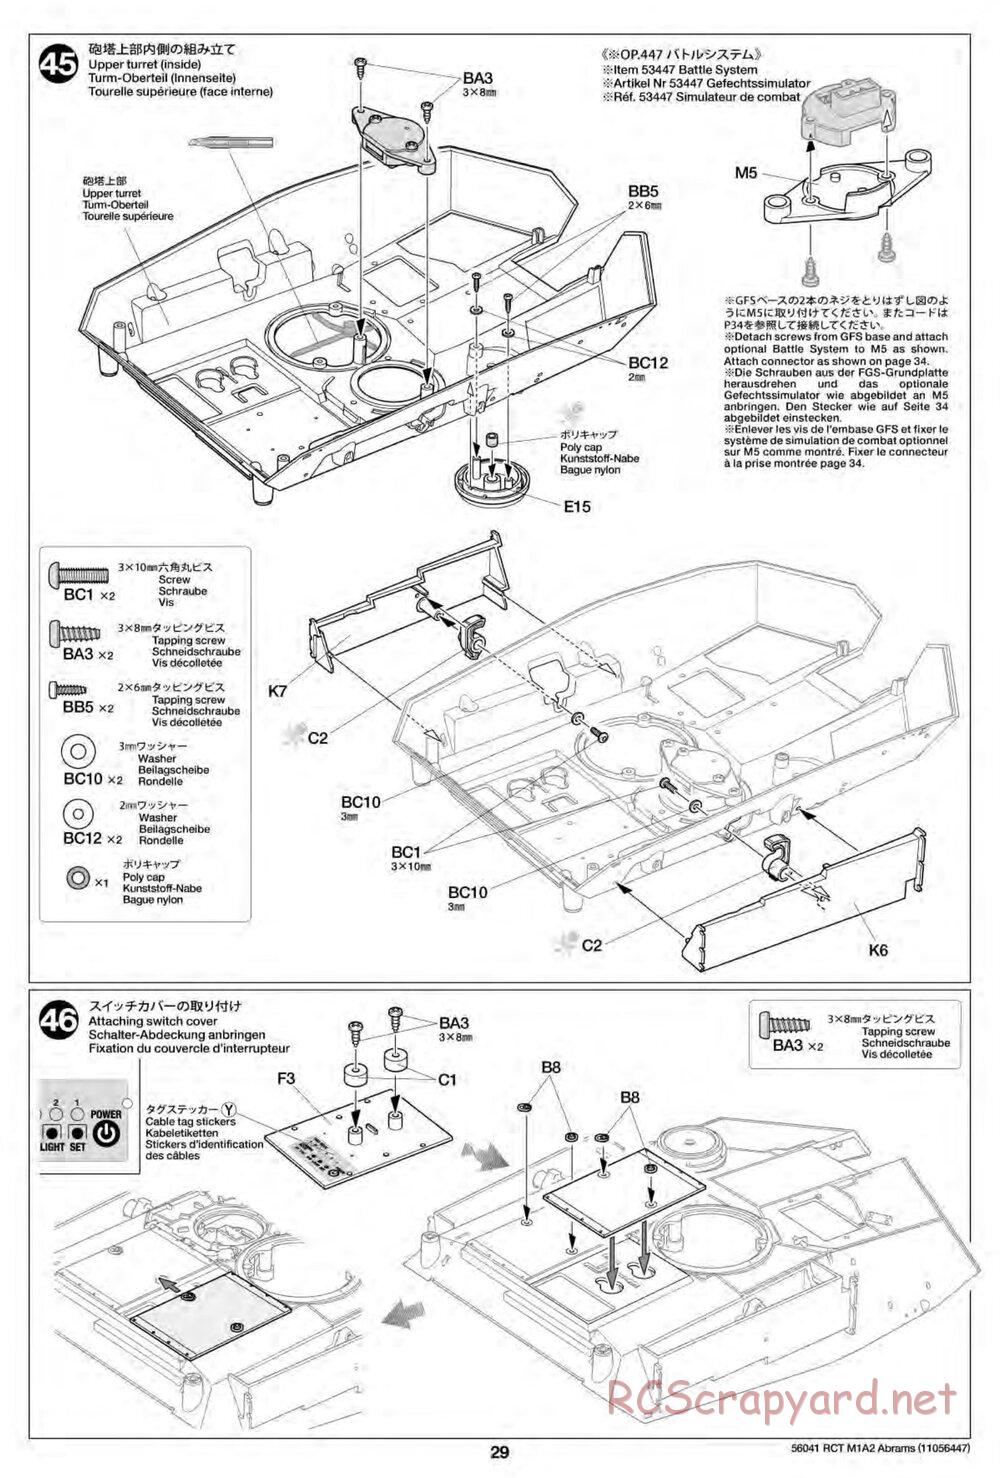 Tamiya - U.S. Main Battle Tank M1A2 Abrams - 1/16 Scale Chassis - Manual - Page 29